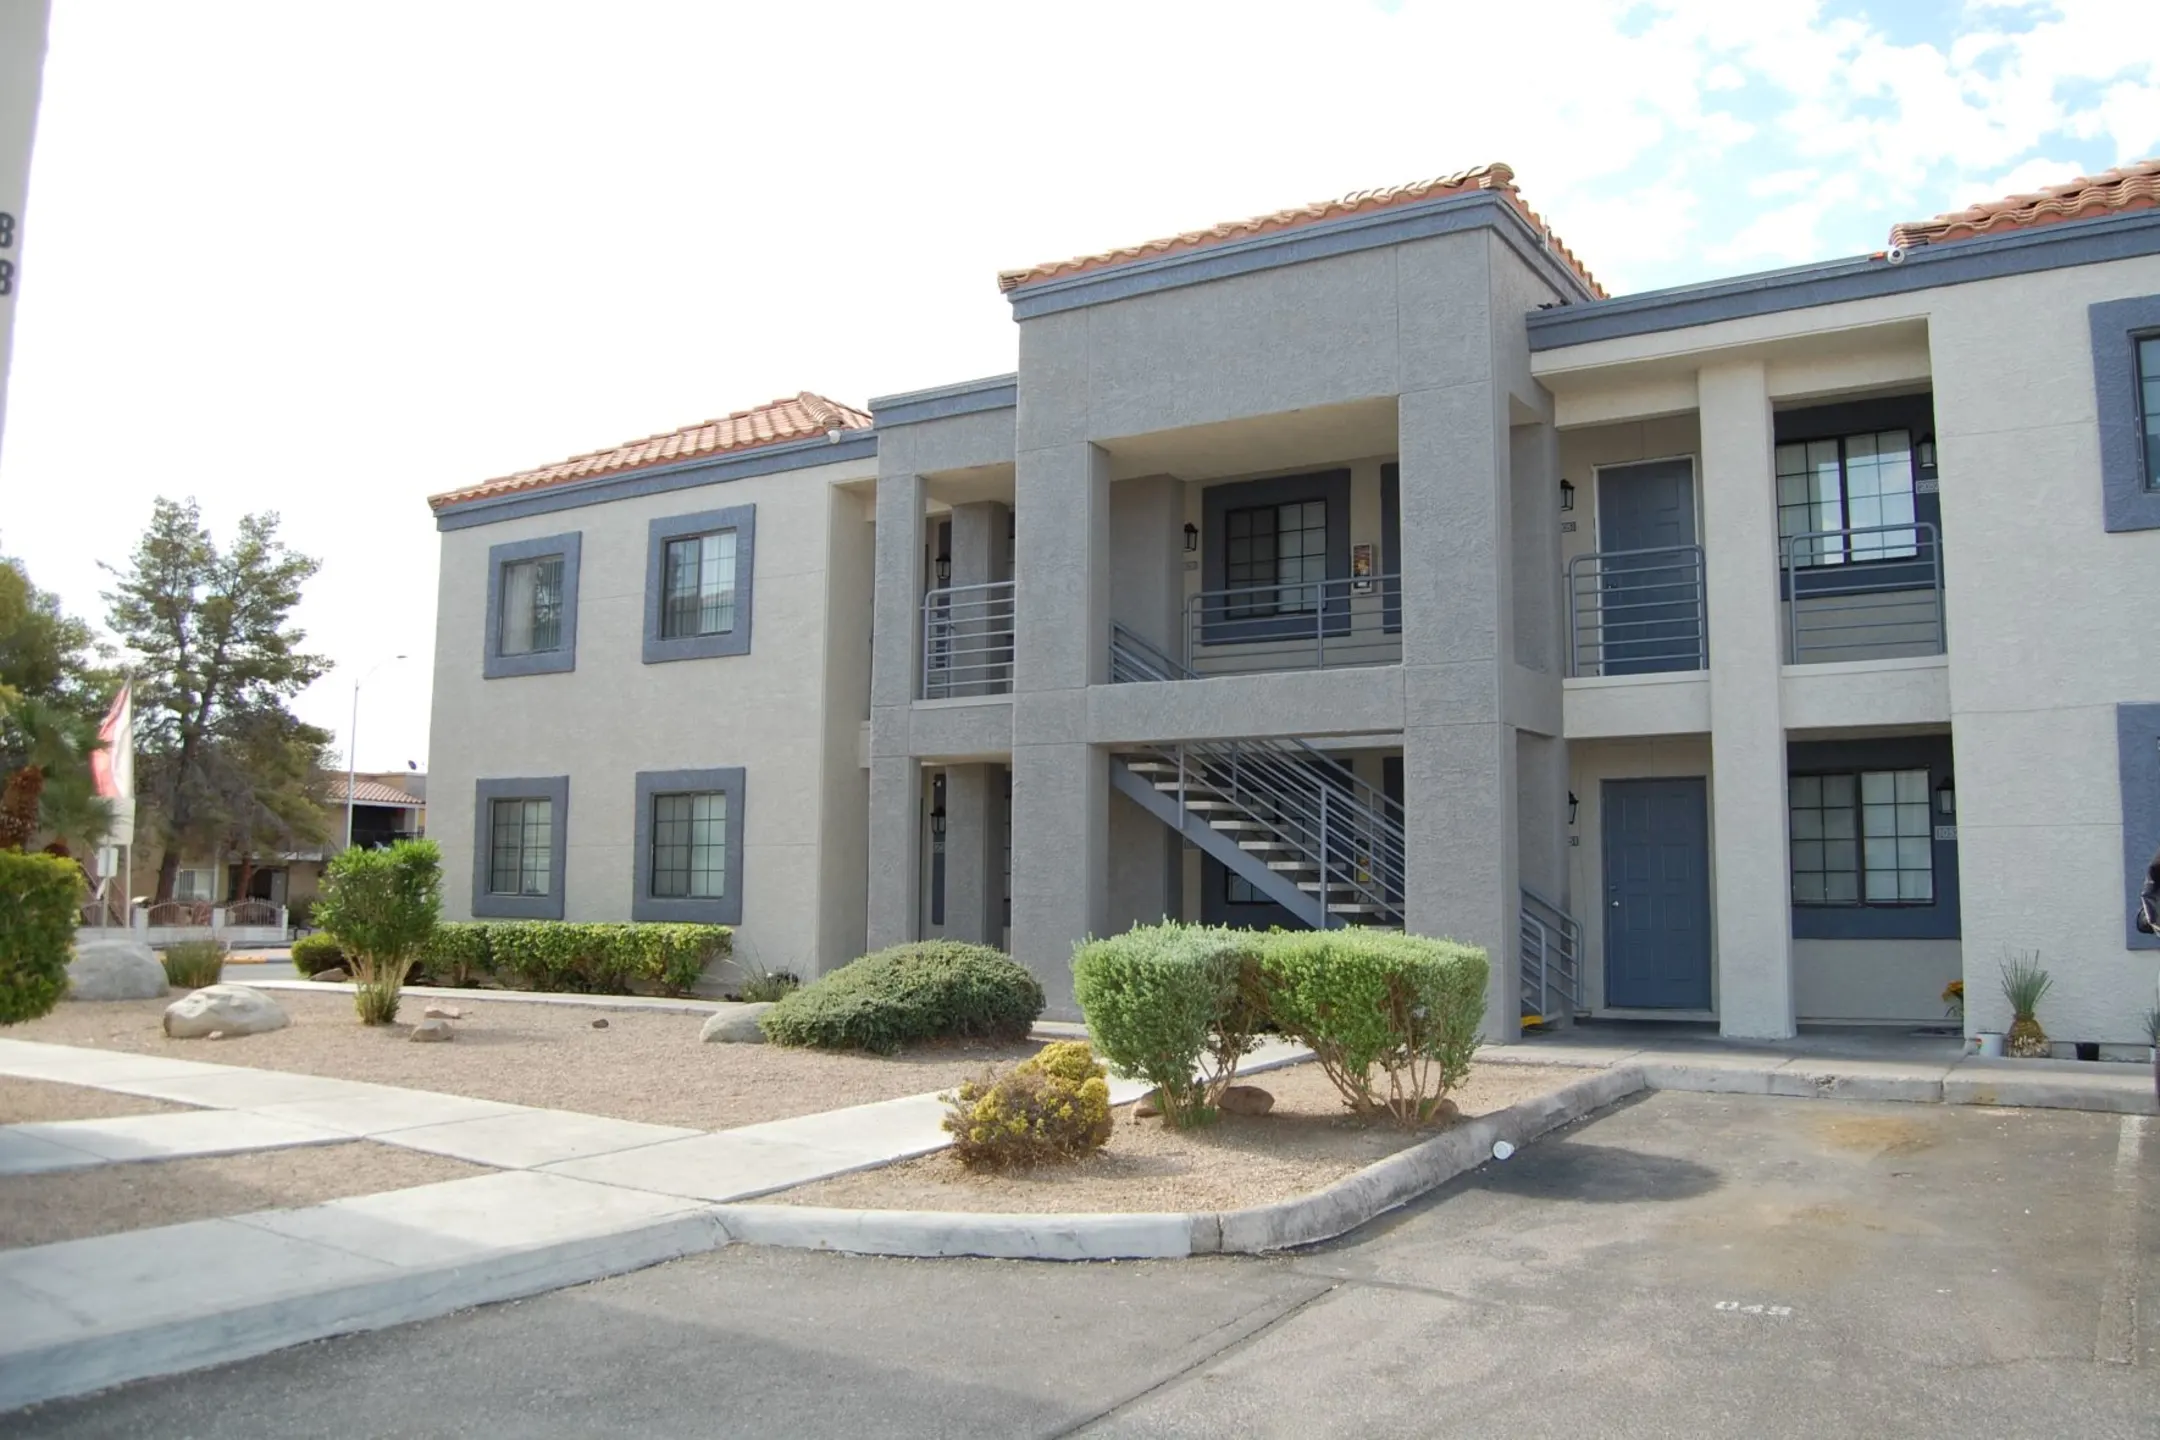 Building - Ashford Manor - Las Vegas, NV